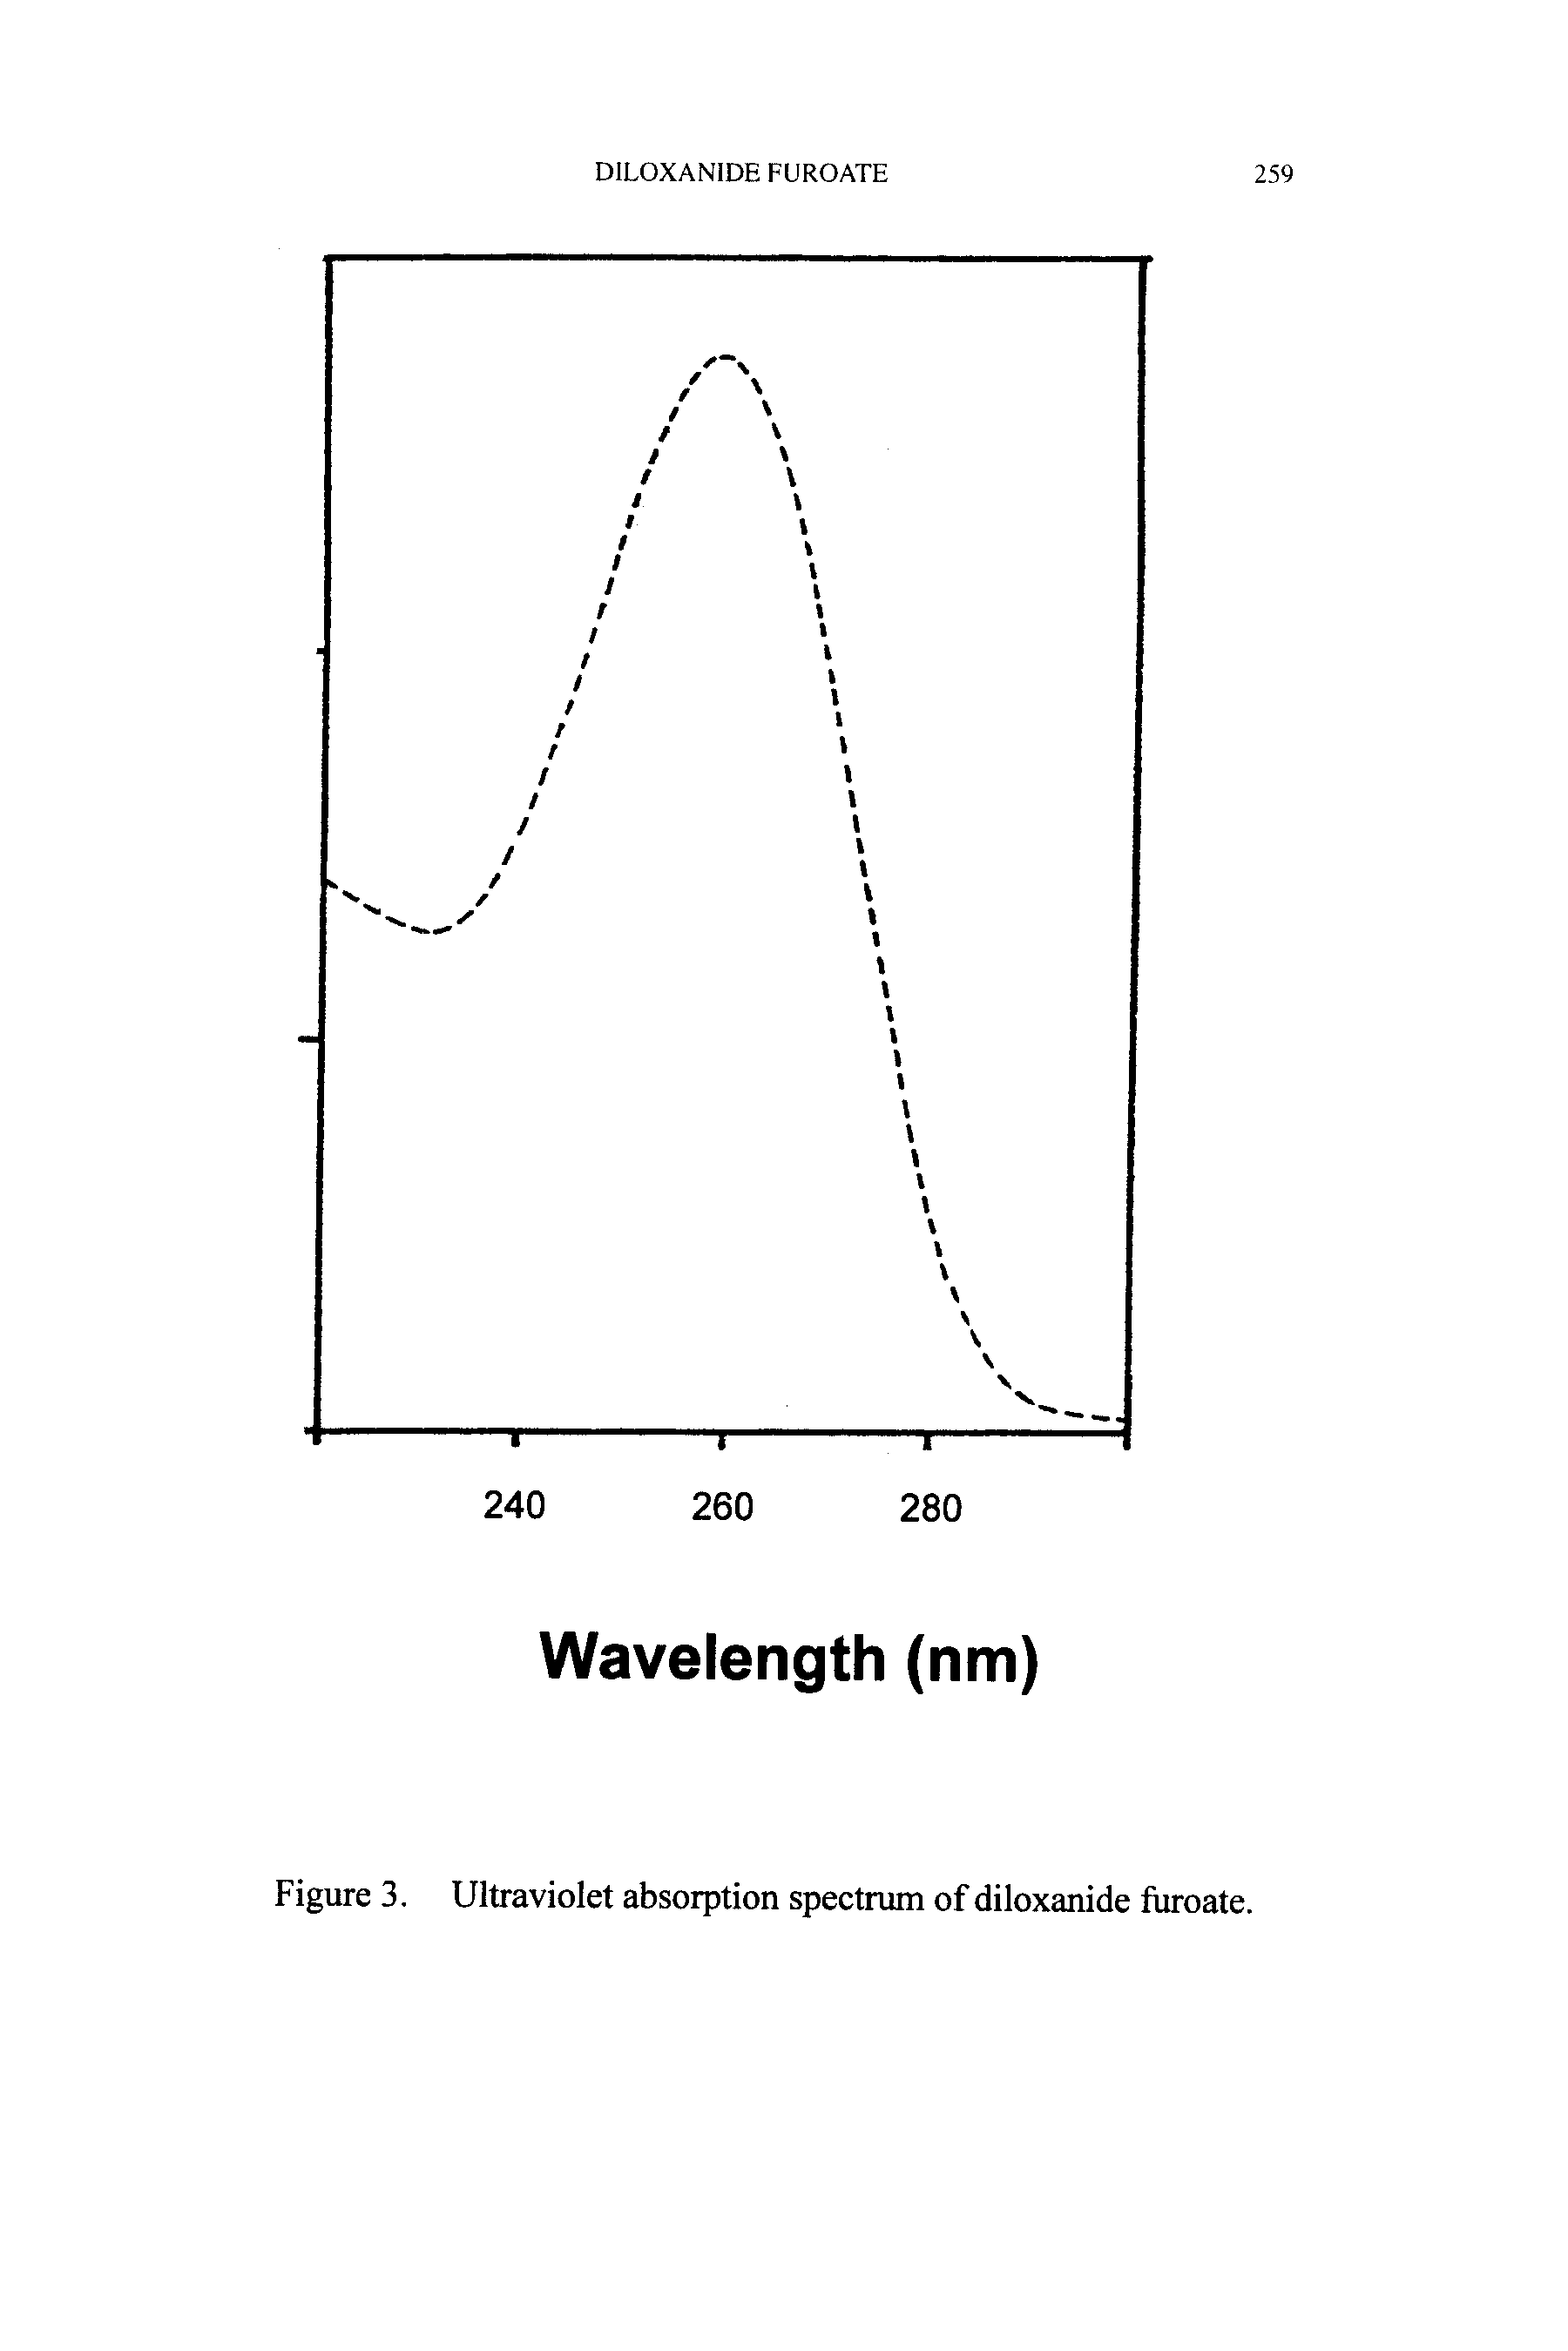 Figure 3. Ultraviolet absorption spectrum of diloxanide furoate.